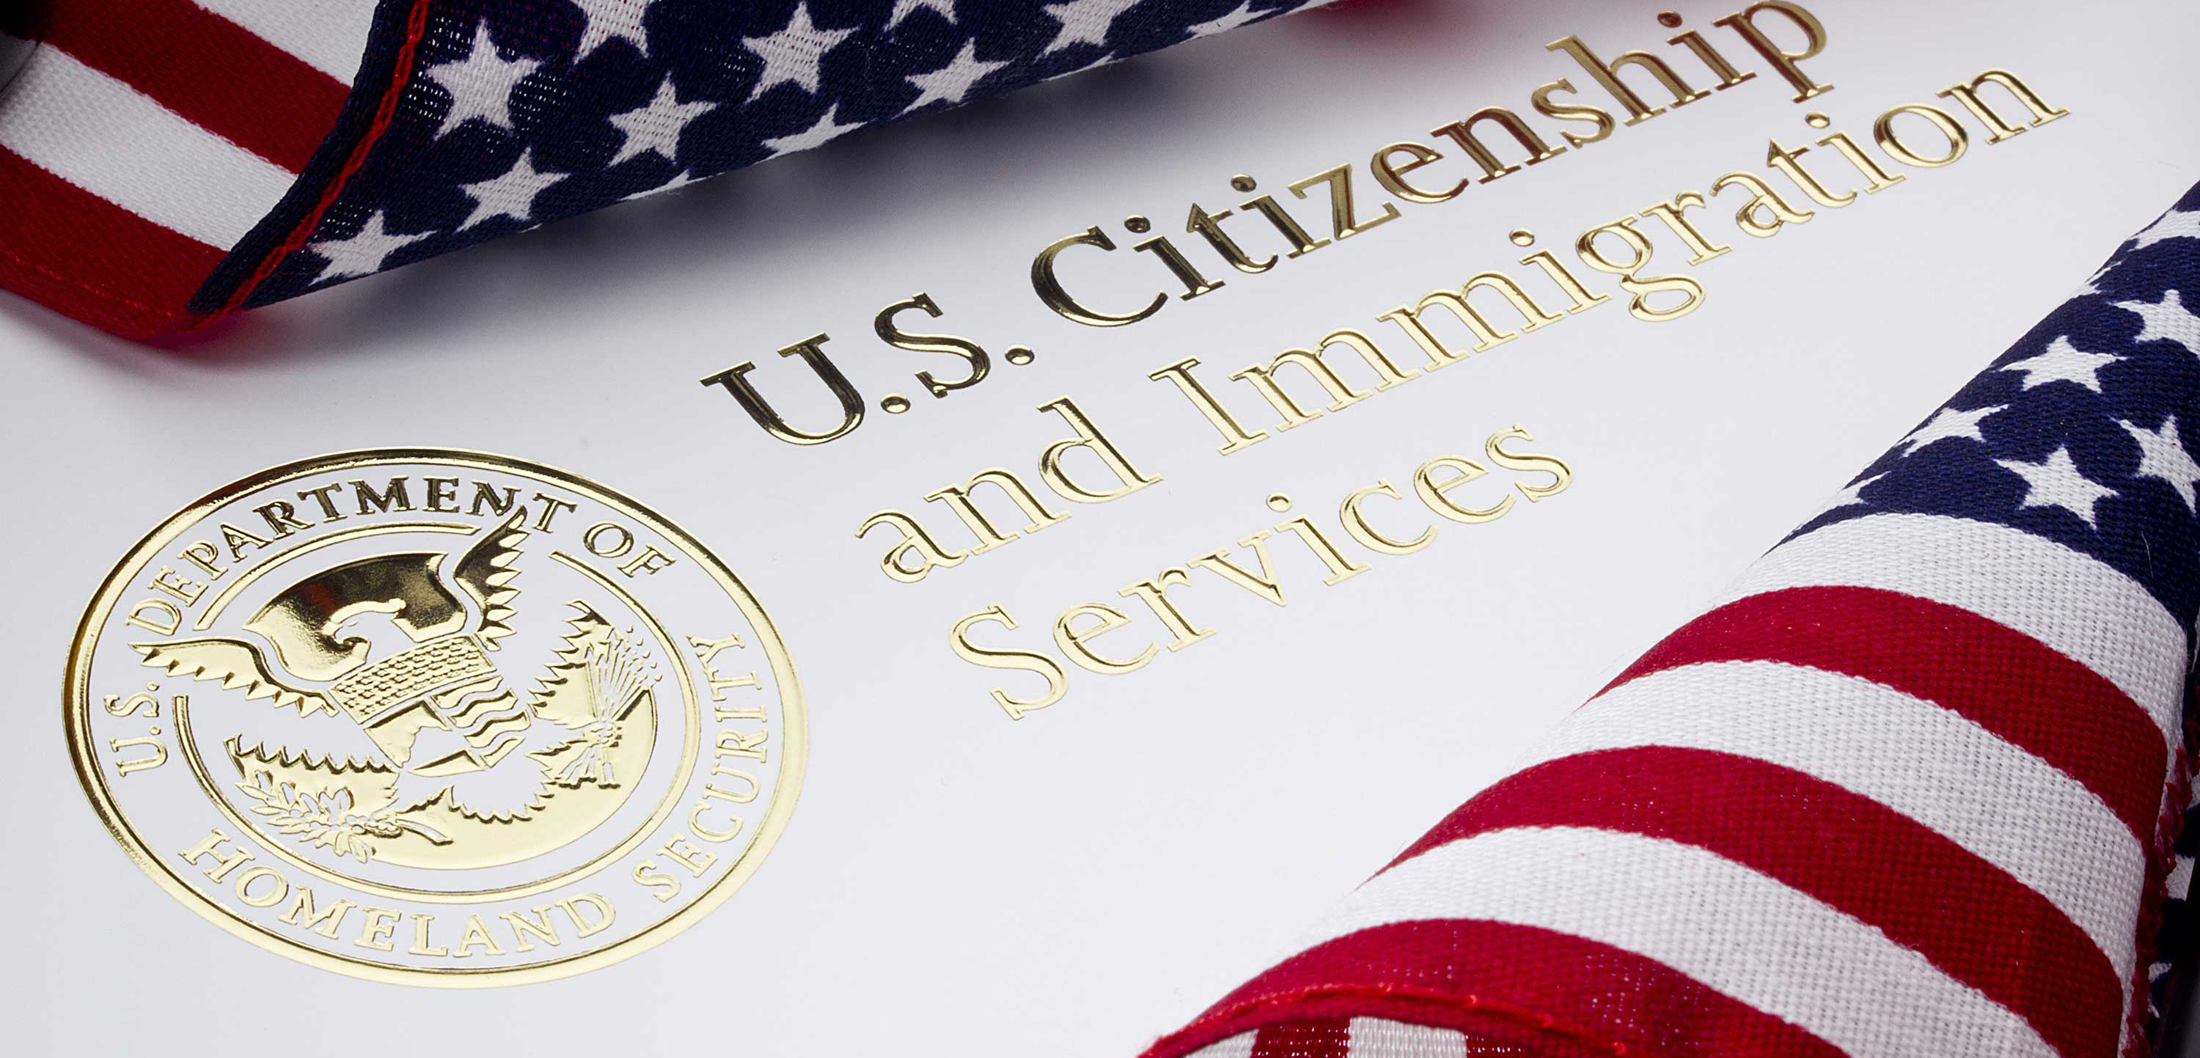 citizenship & immigration services & homeland seal